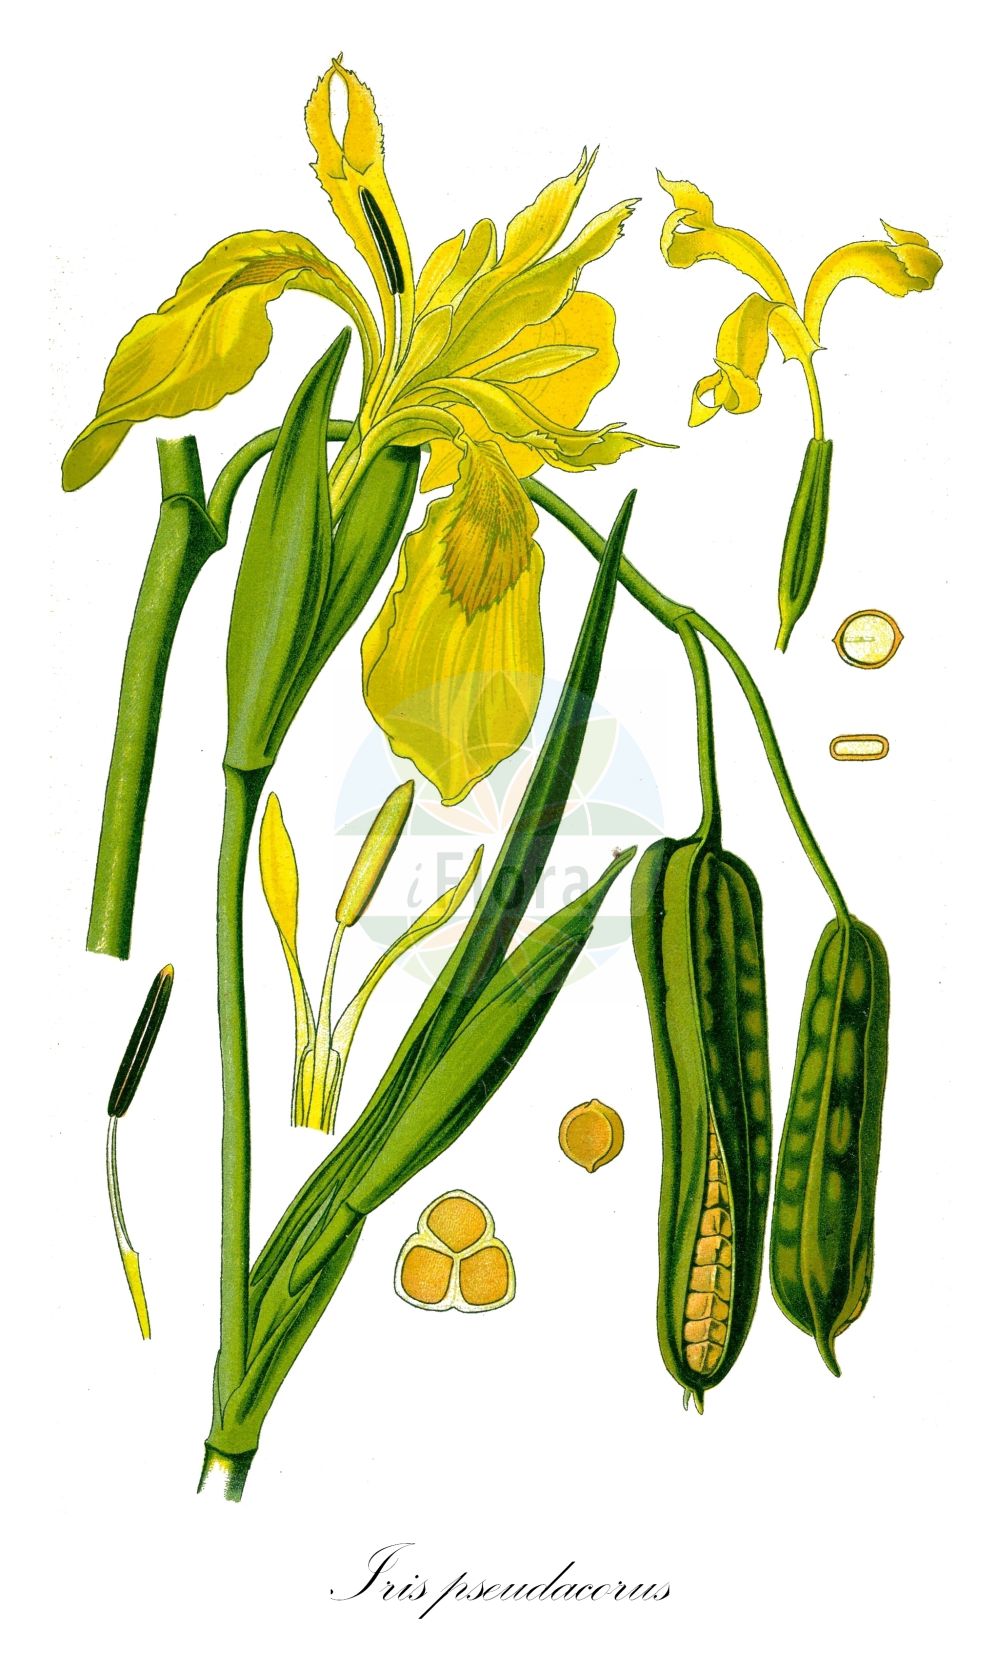 Historische Abbildung von Iris pseudacorus (Sumpf-Schwertlilie - Yellow Iris). ---- Historical Drawing of Iris pseudacorus (Sumpf-Schwertlilie - Yellow Iris).(Iris pseudacorus,Sumpf-Schwertlilie,Yellow Iris,Acorus adulterinus,Colchicum falcifolium,Iris acoriformis,Iris acoroides,Iris bastardii,Iris curtopetala,Iris flava,Iris lutea,Iris pallidior,Iris paludosa,Iris palustris,Iris pseudacorus,Iris sativa,Limnirion pseudacorus,Limniris pseudacorus,Moraea candolleana,Pseudo-iris palustris,Vieusseuxia iridioides,Xiphion acoroides,Xiphion pseudacorus,Xyridion acoroideum,Xyridion pseudacorus,Sumpf-Schwertlilie,Gelbe Schwertlilie,Wasser-Schwertlilie,Yellow Iris,Jacob's Wort,Paleyellow Iris,Rocky Mountain Iris,Water Flag,Yellow Flag,Yellow-flag Iris,Iris,Schwertlilie,Iris,Iridaceae,Schwertliliengewächse,Iris family,Thomé (1885))